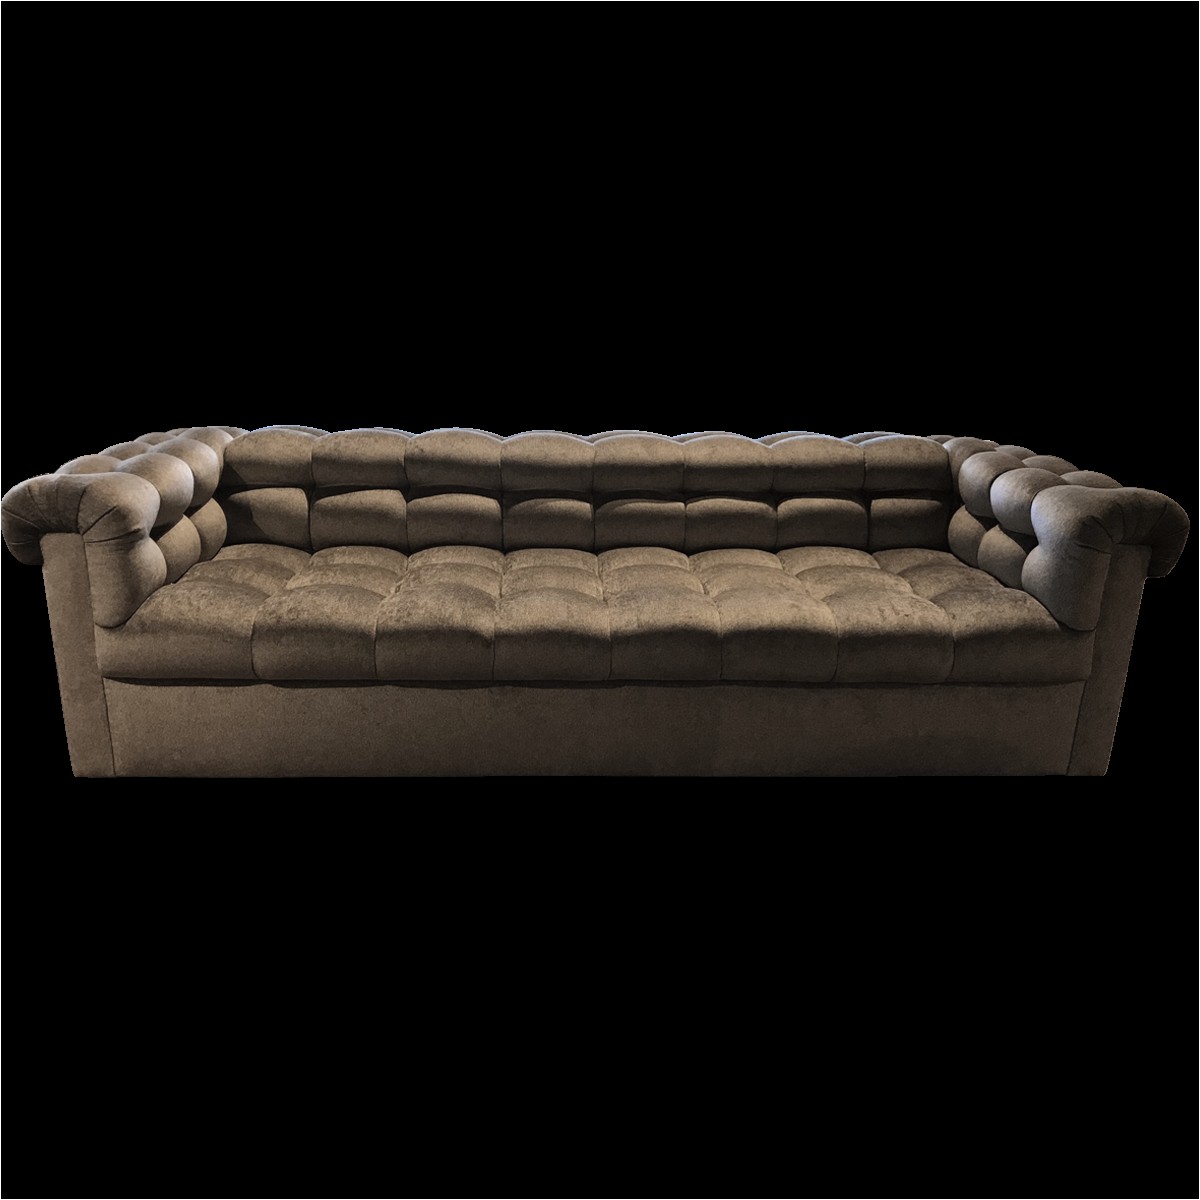 viyet designer furniture seating a rudin 2736 chesterfield silhouette sofa